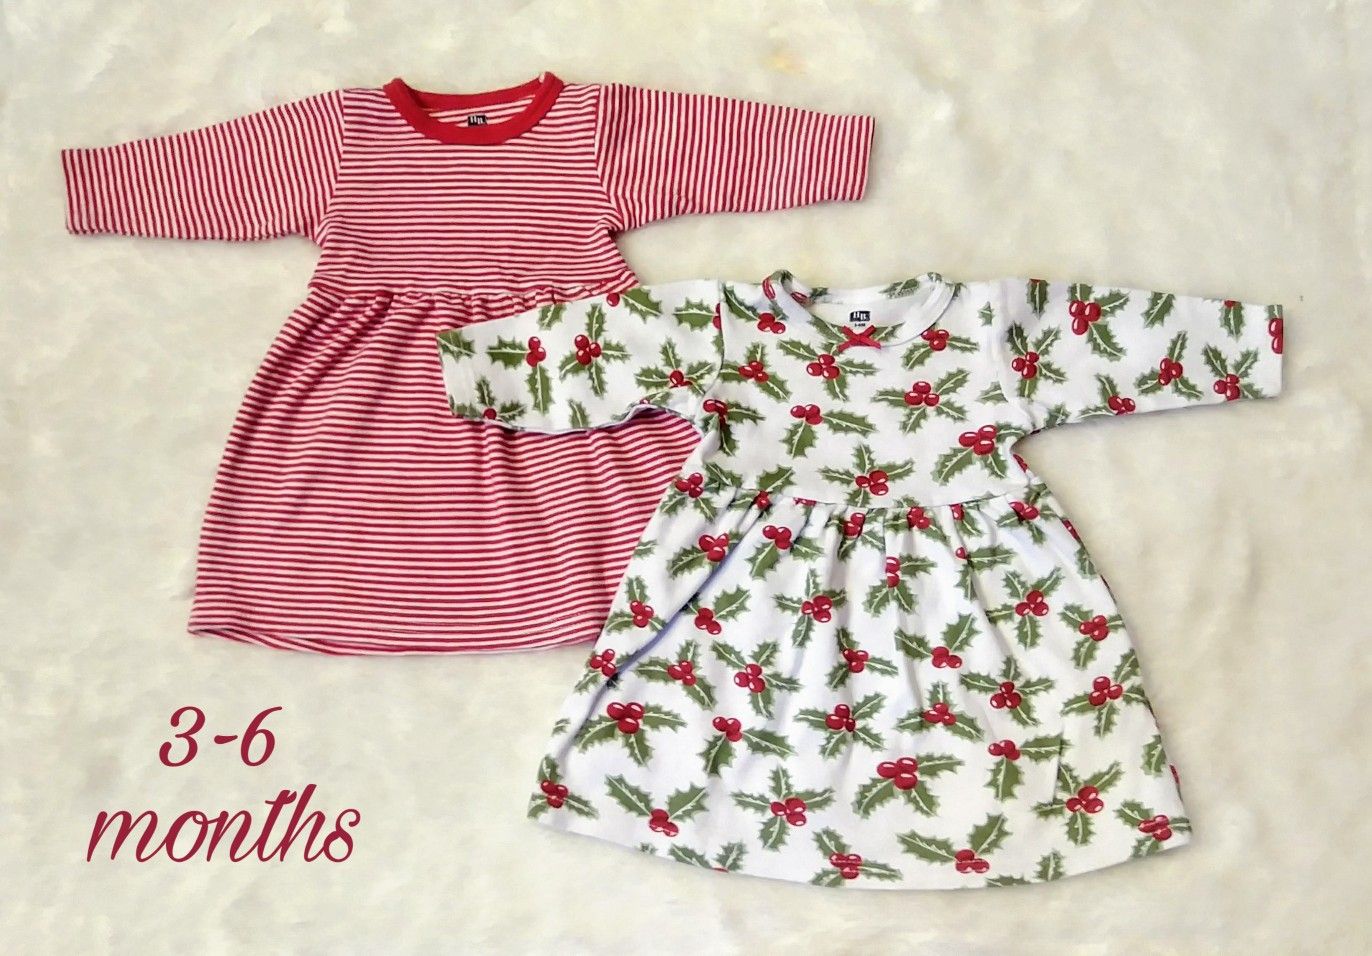 2 HB baby dresses